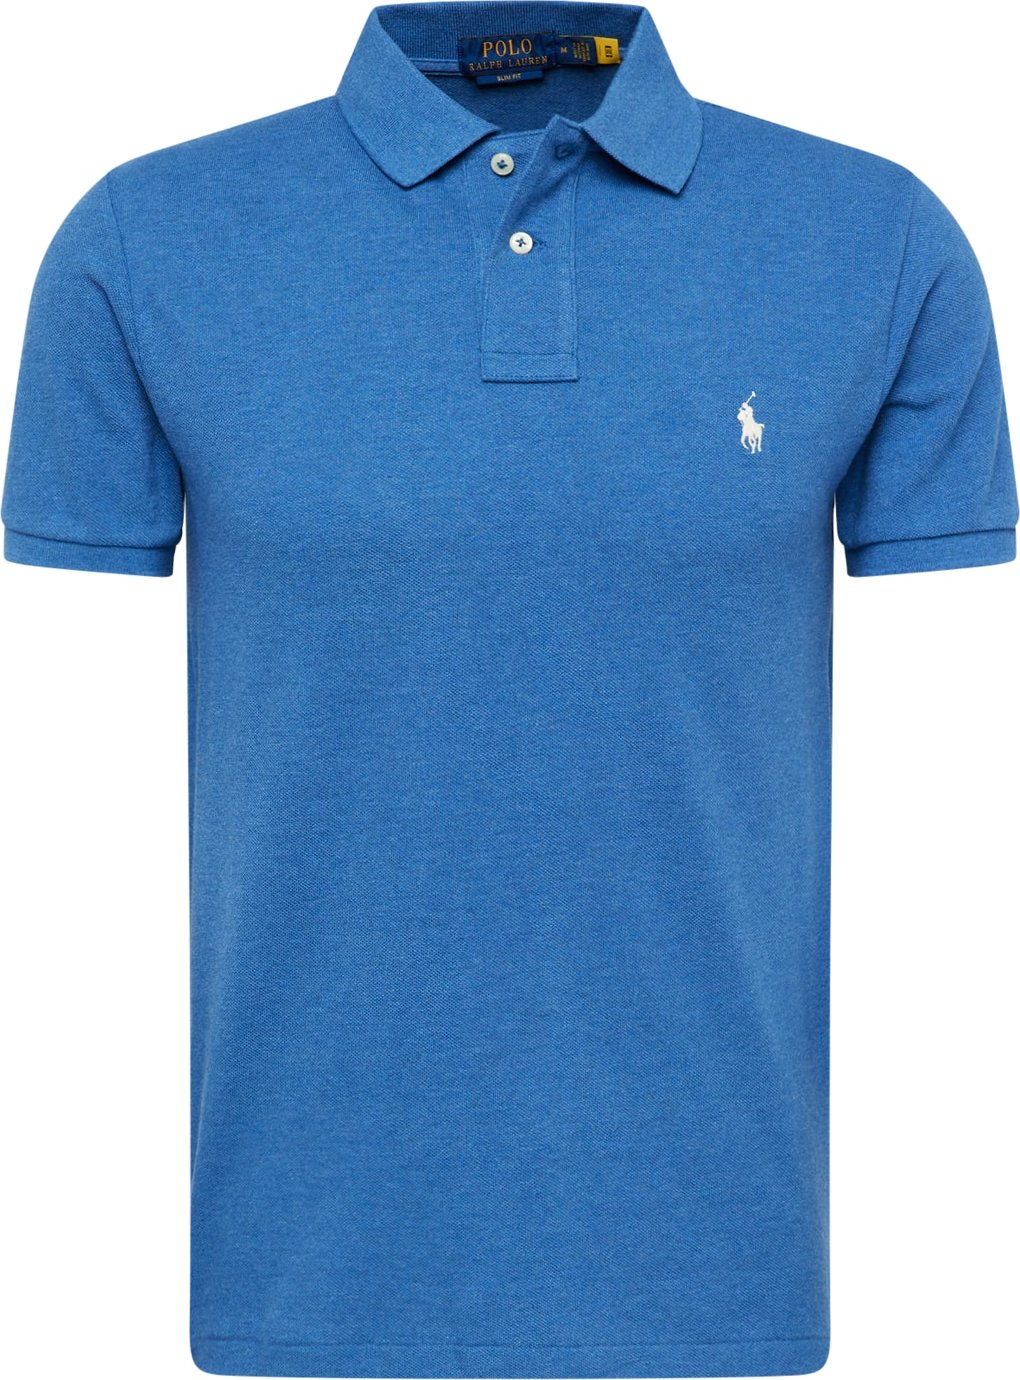 Tričko Polo Ralph Lauren královská modrá / bílá